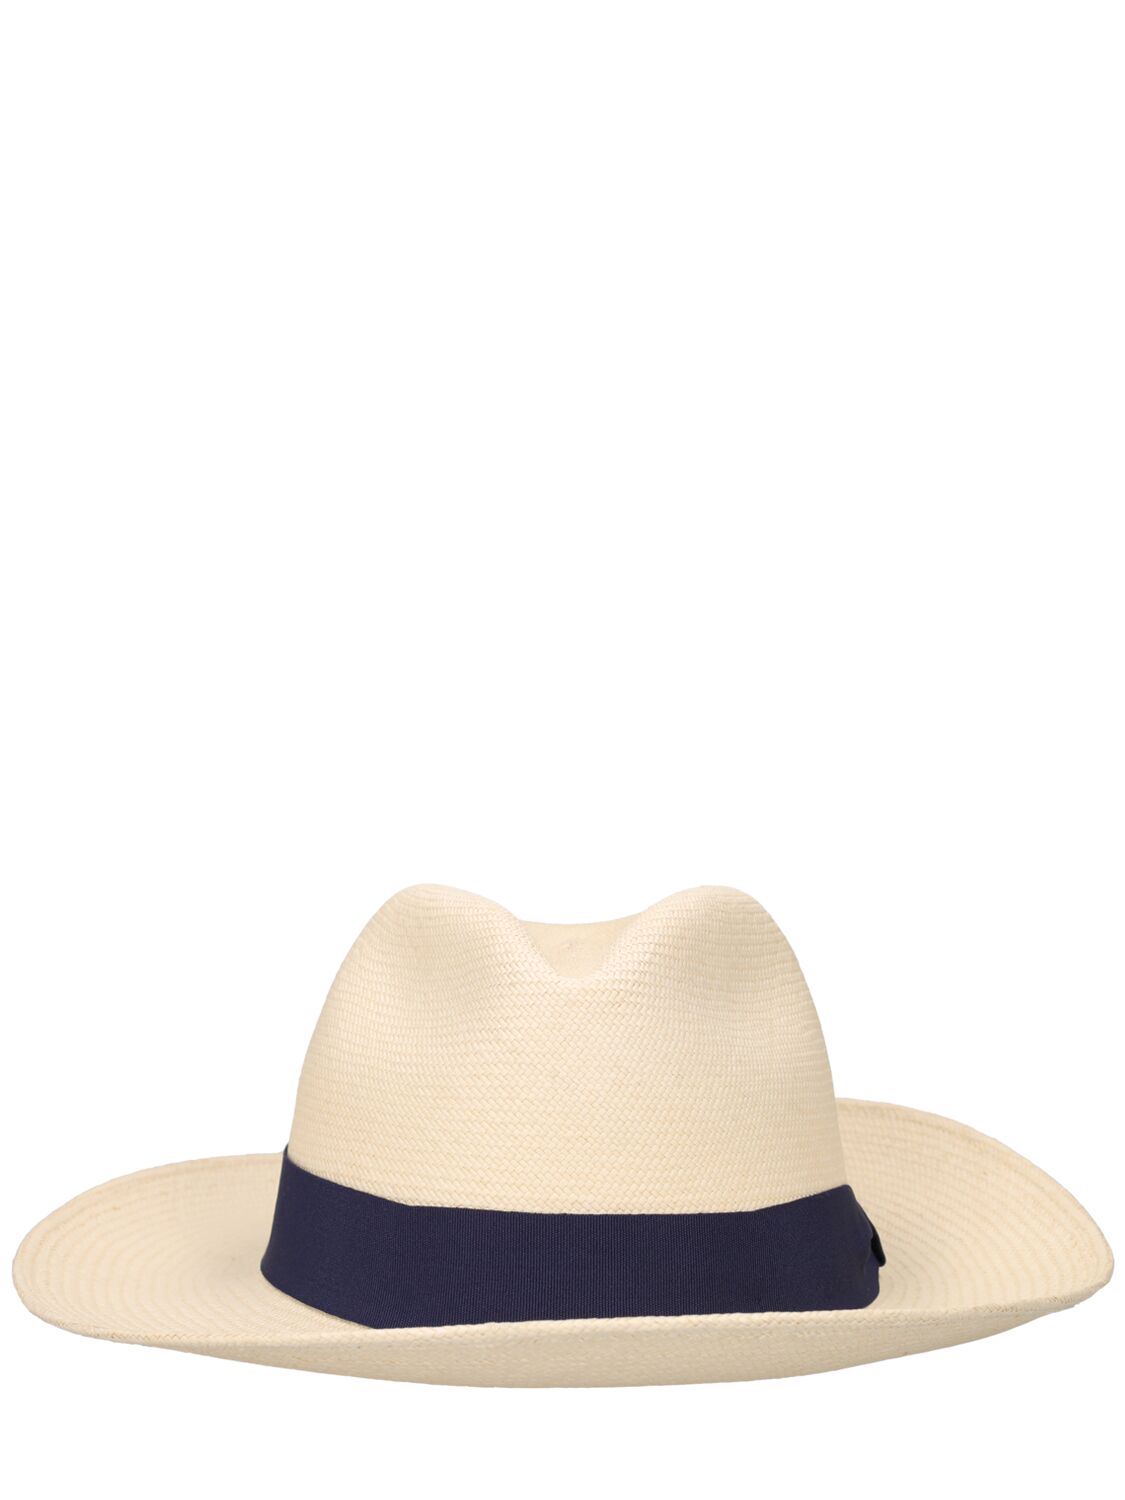 Ecuadorian Panama Straw Hat